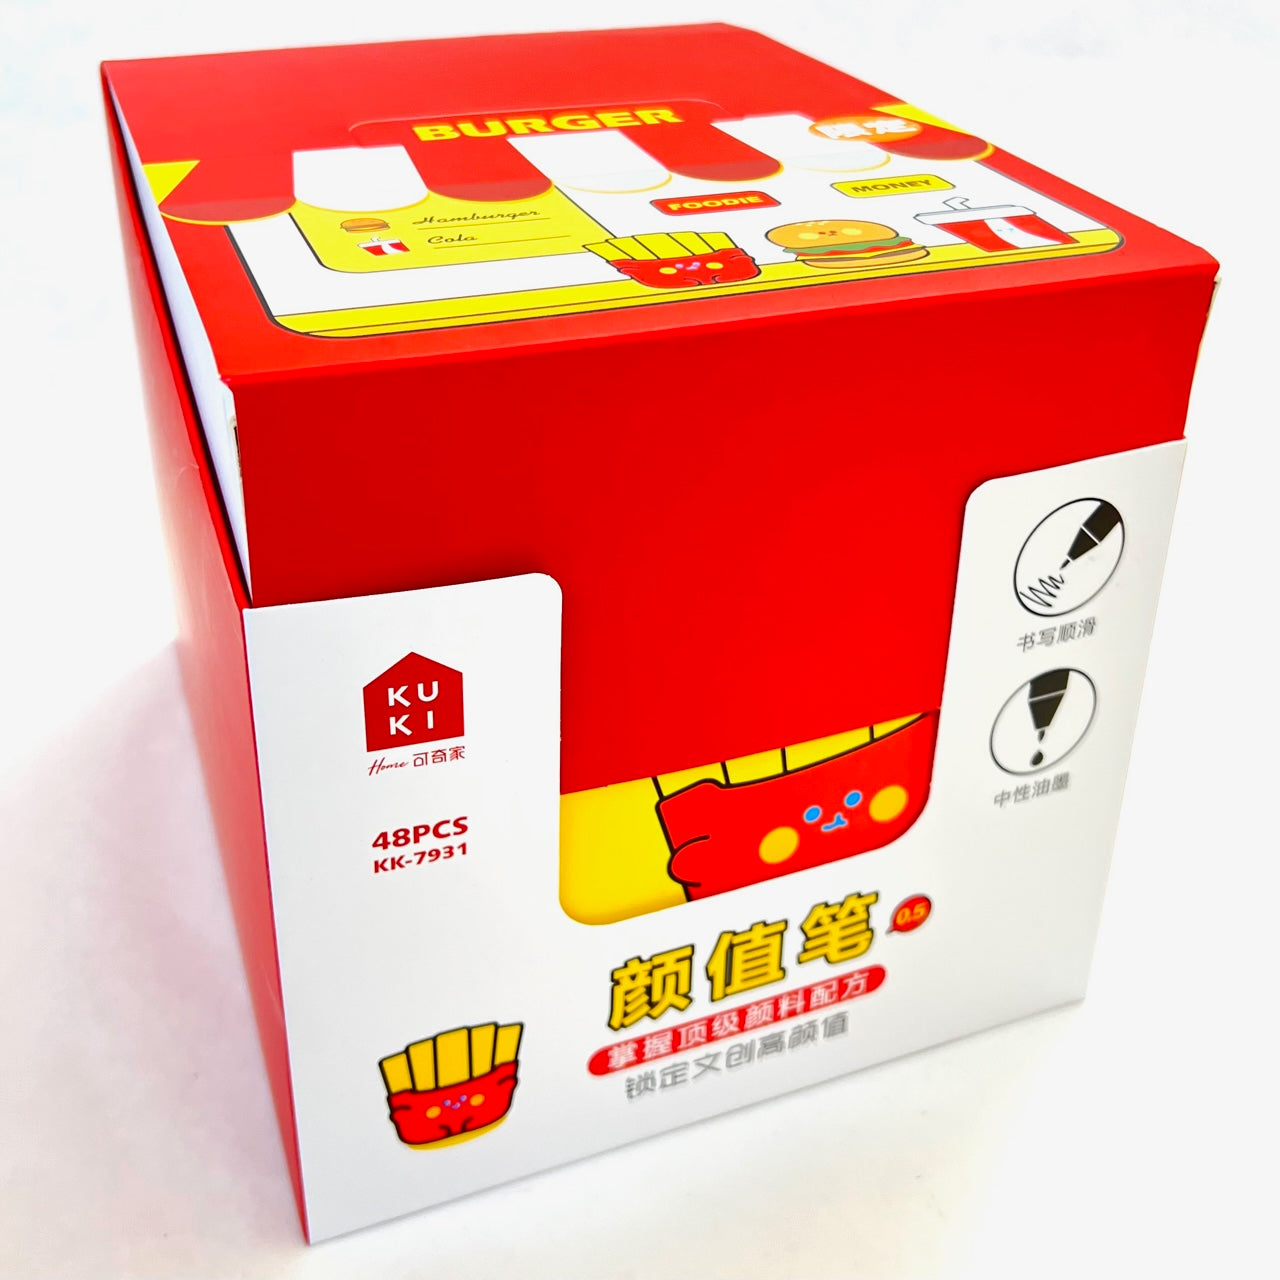 Spice Box™ Gel Pen Kit for Kids, 1 ct - Ralphs